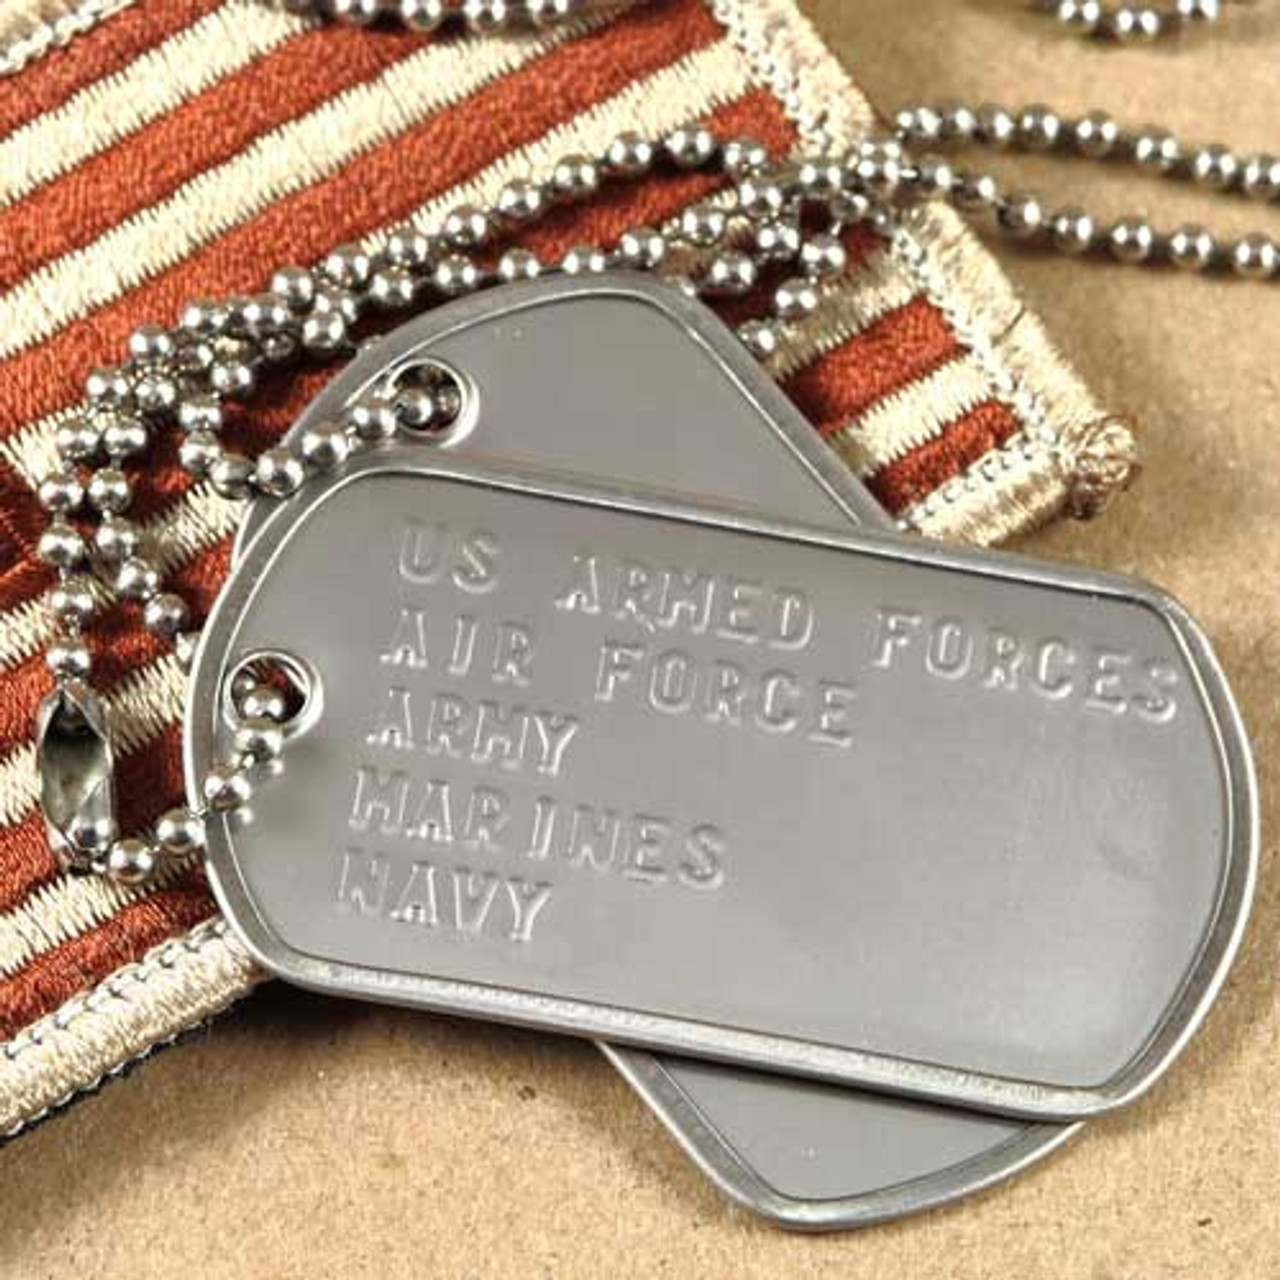 custom military dog tags for humans